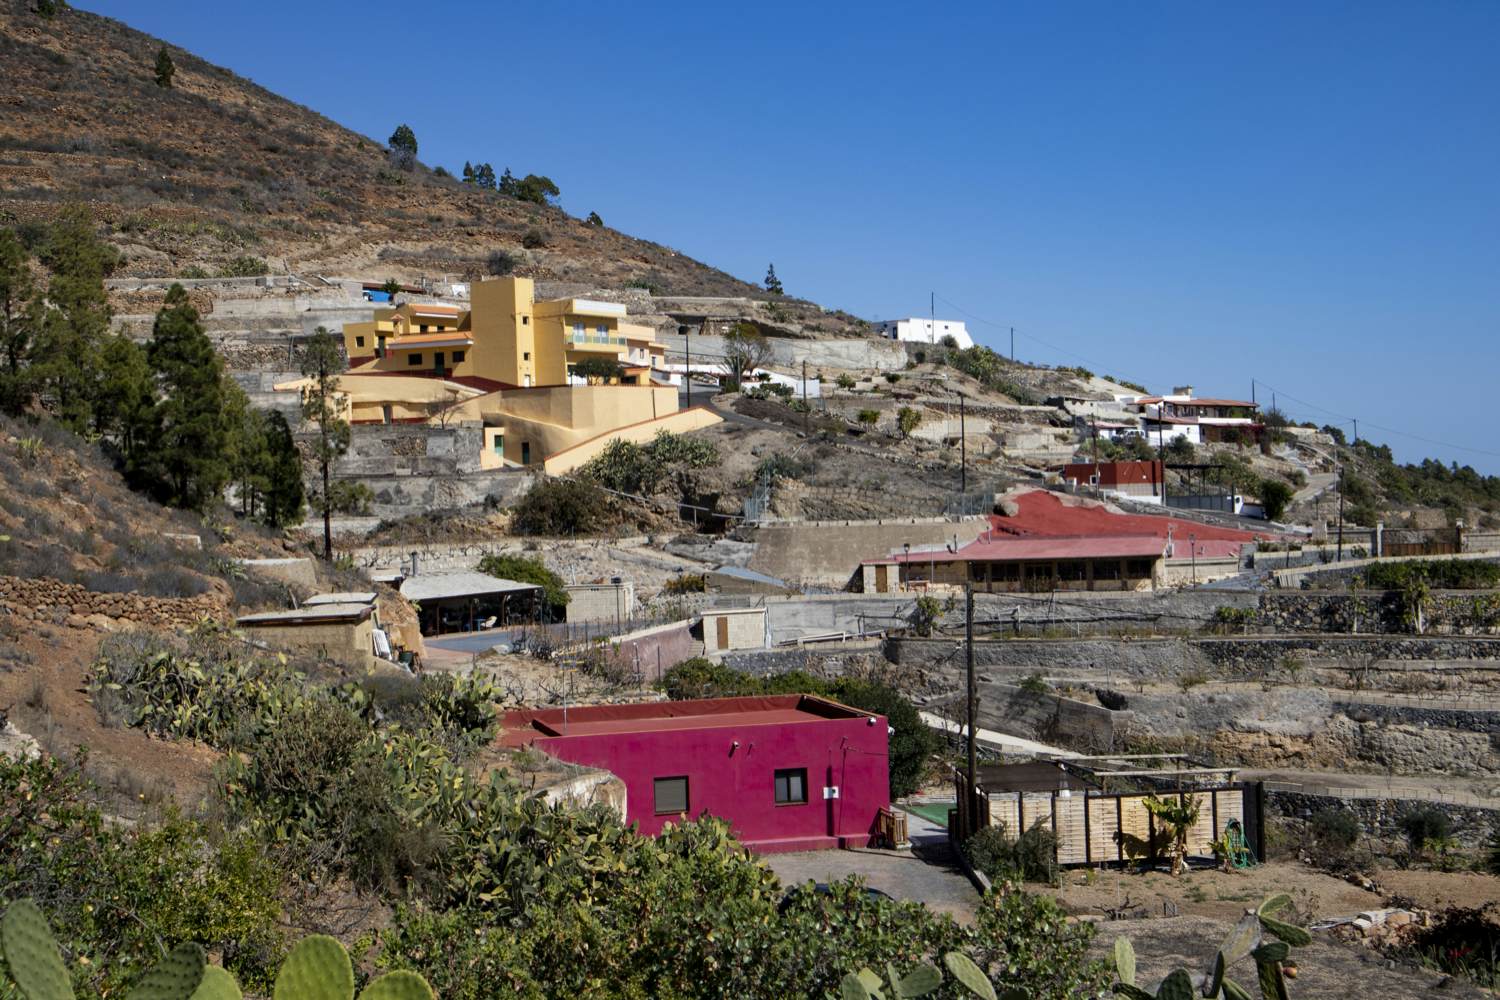 the hamlet of La Higuera